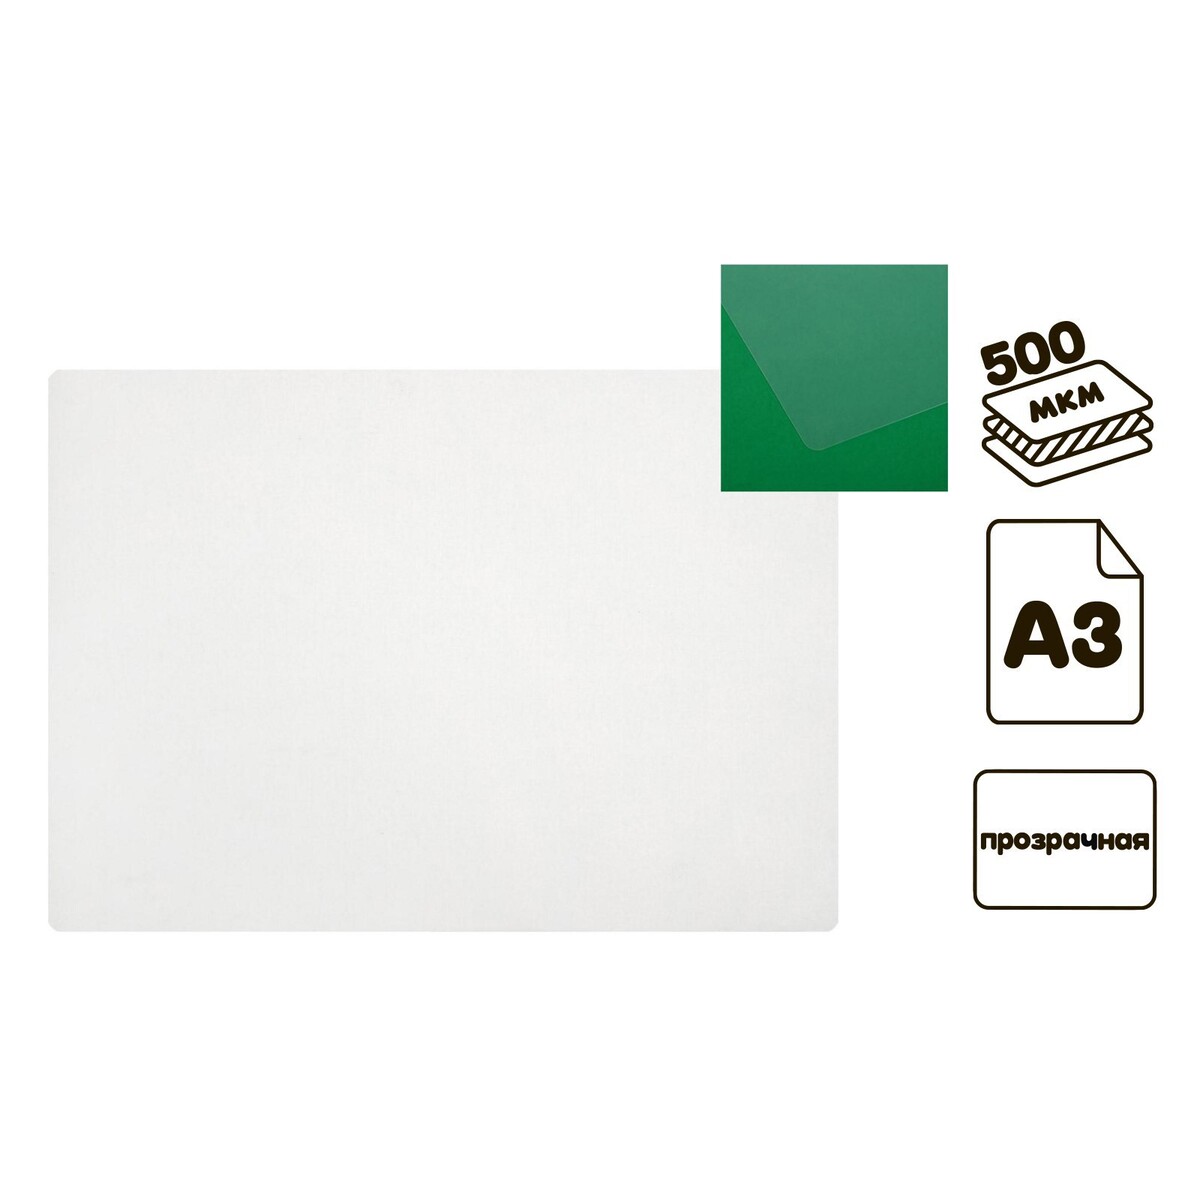 Накладка на стол пластиковая а3, 460 х 330 мм, 500 мкм, прозрачная, бесцветная (подходит для офиса) накладка на стол пластиковая а4 345 x 245 мм 500 мкм обучающая calligrata